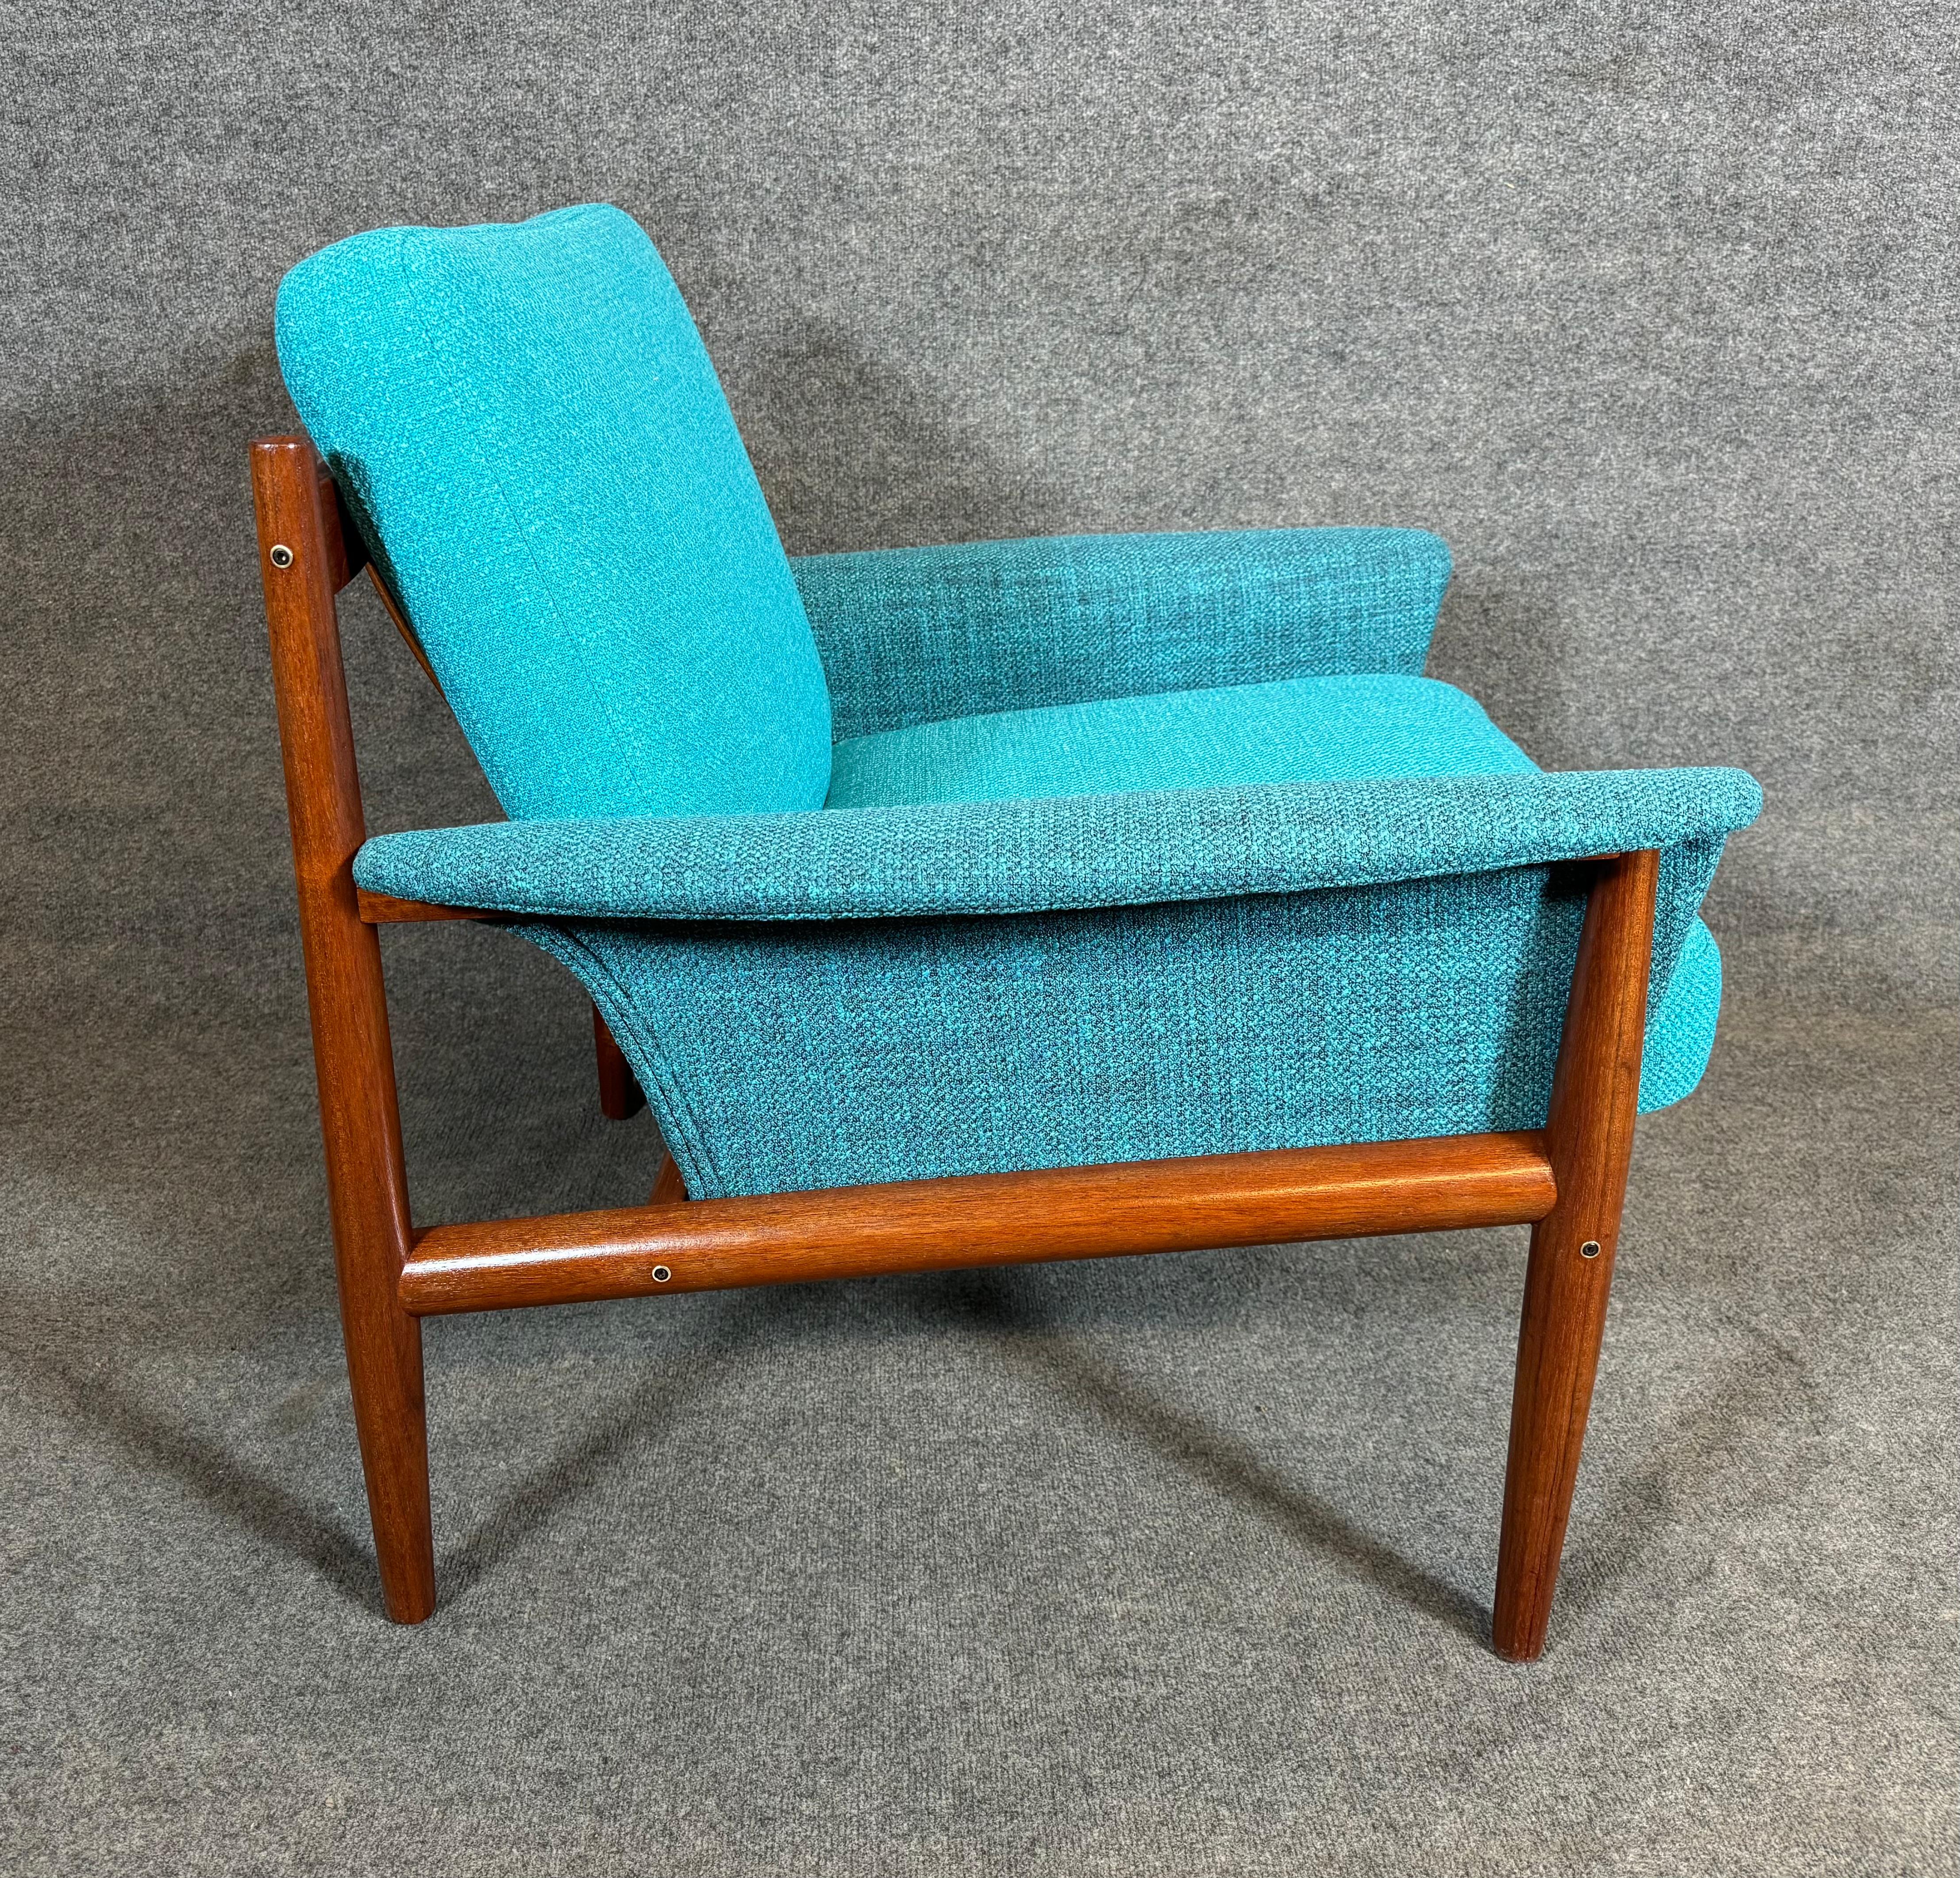 Scandinavian Modern Vintage Danish Mid Century Modern Teak Lounge Chair and Ottoman by Grete Jalk For Sale